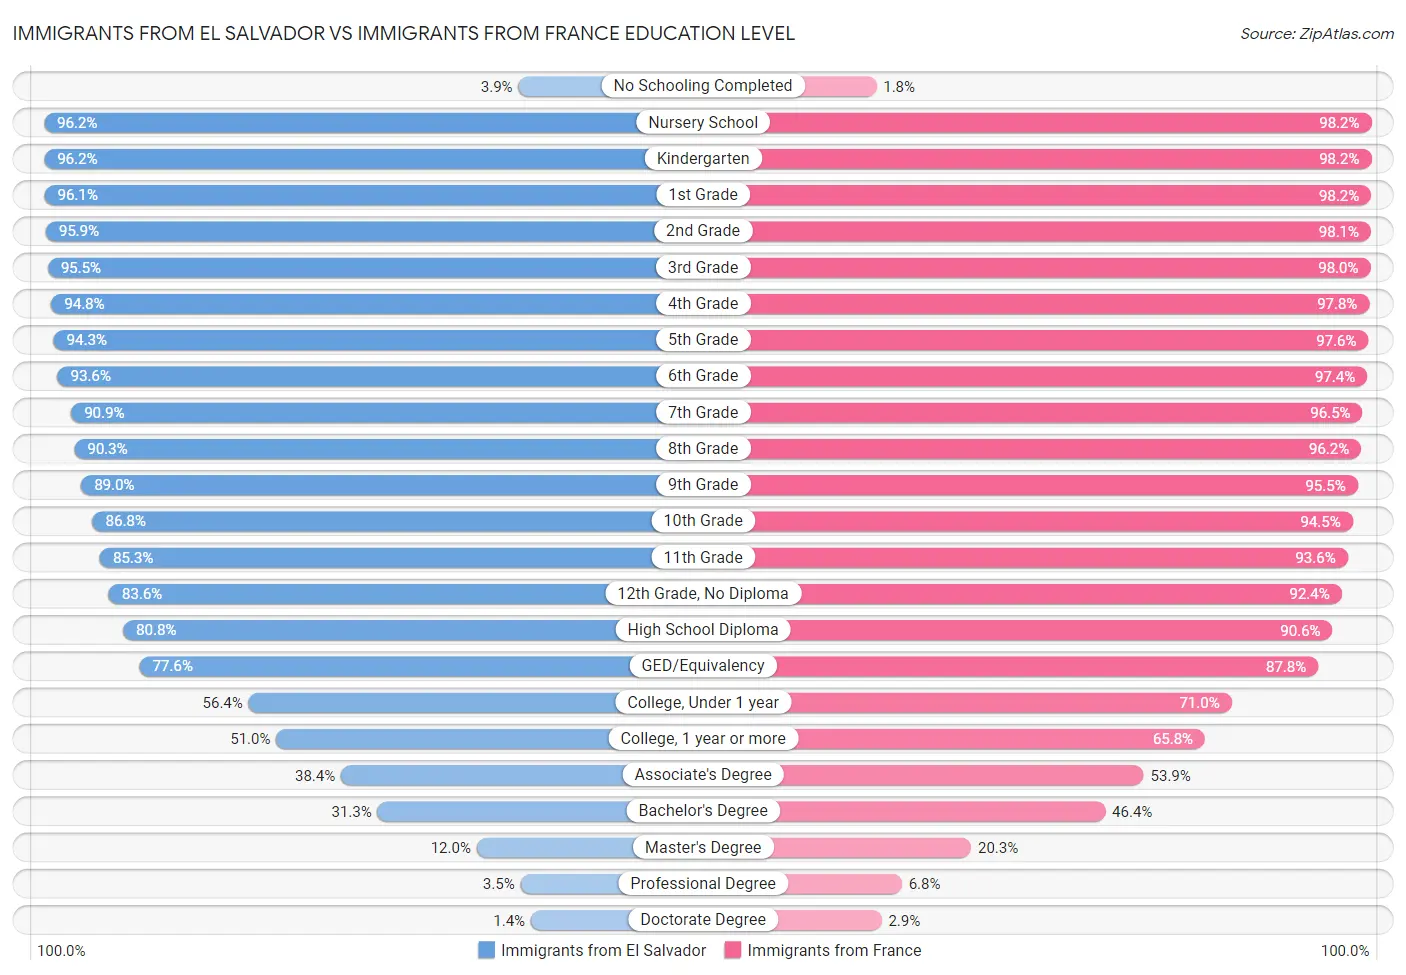 Immigrants from El Salvador vs Immigrants from France Education Level